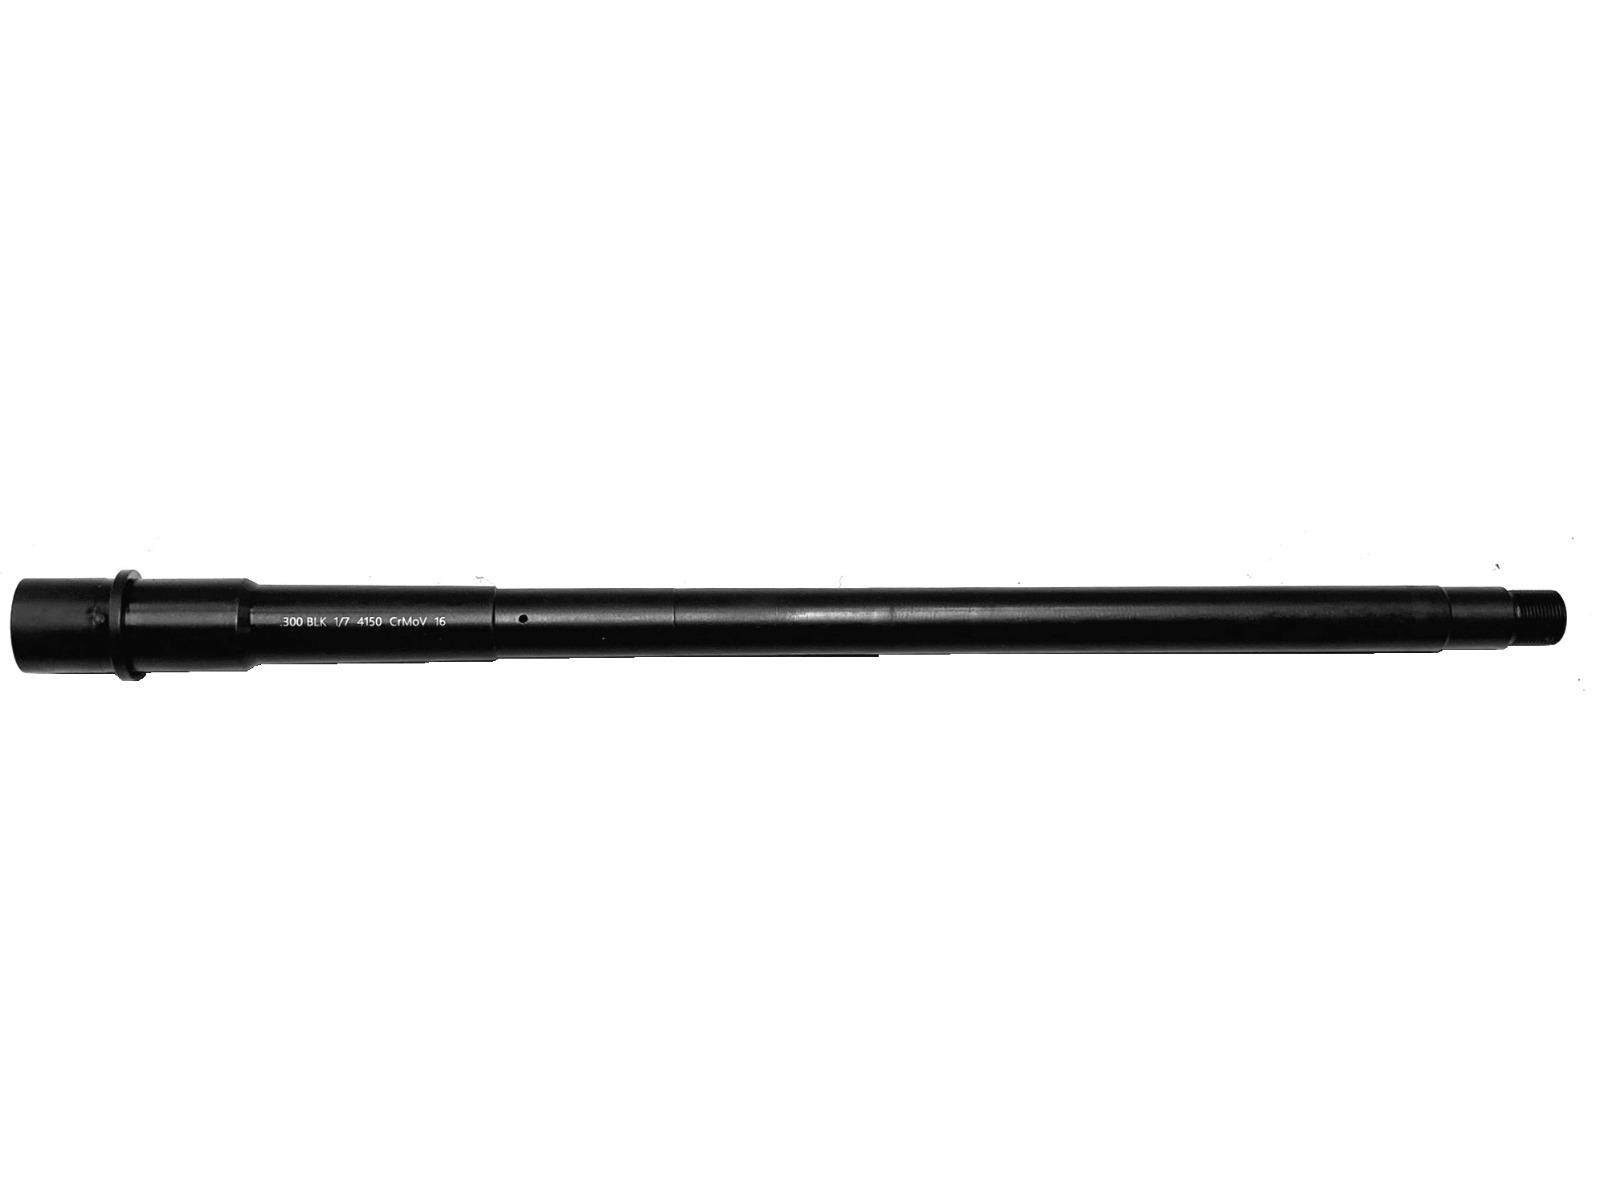 Kinetic MFG 16 inch AR-15 300 Blackout Melonite 17 Twist Barrel